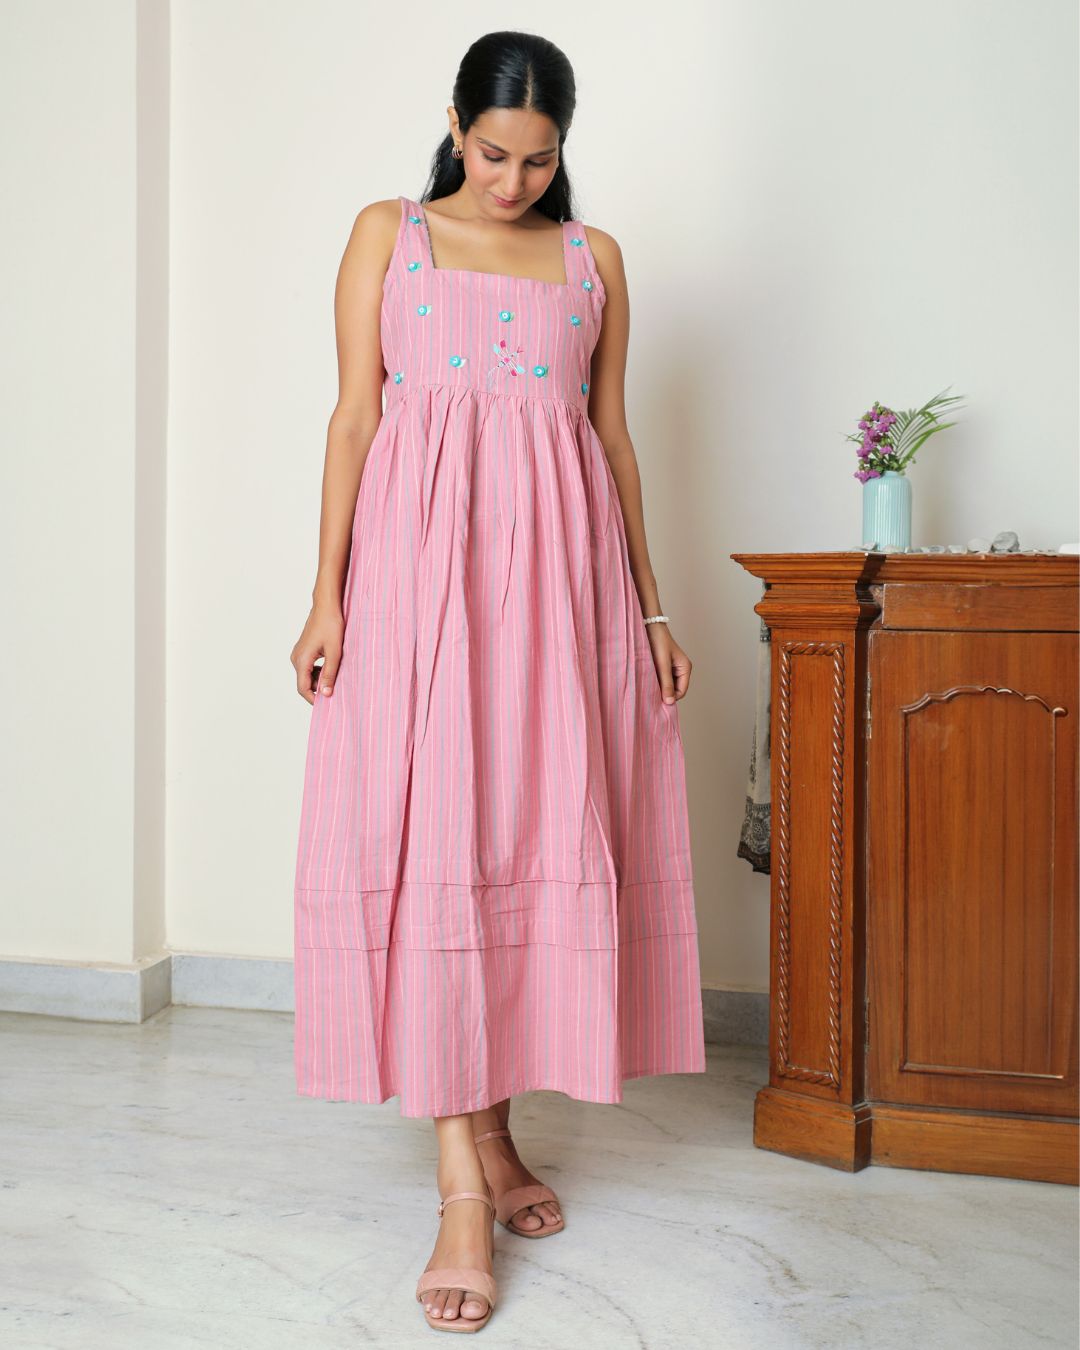 Shop maxi pink dress from Bebaak: Handmade clothing